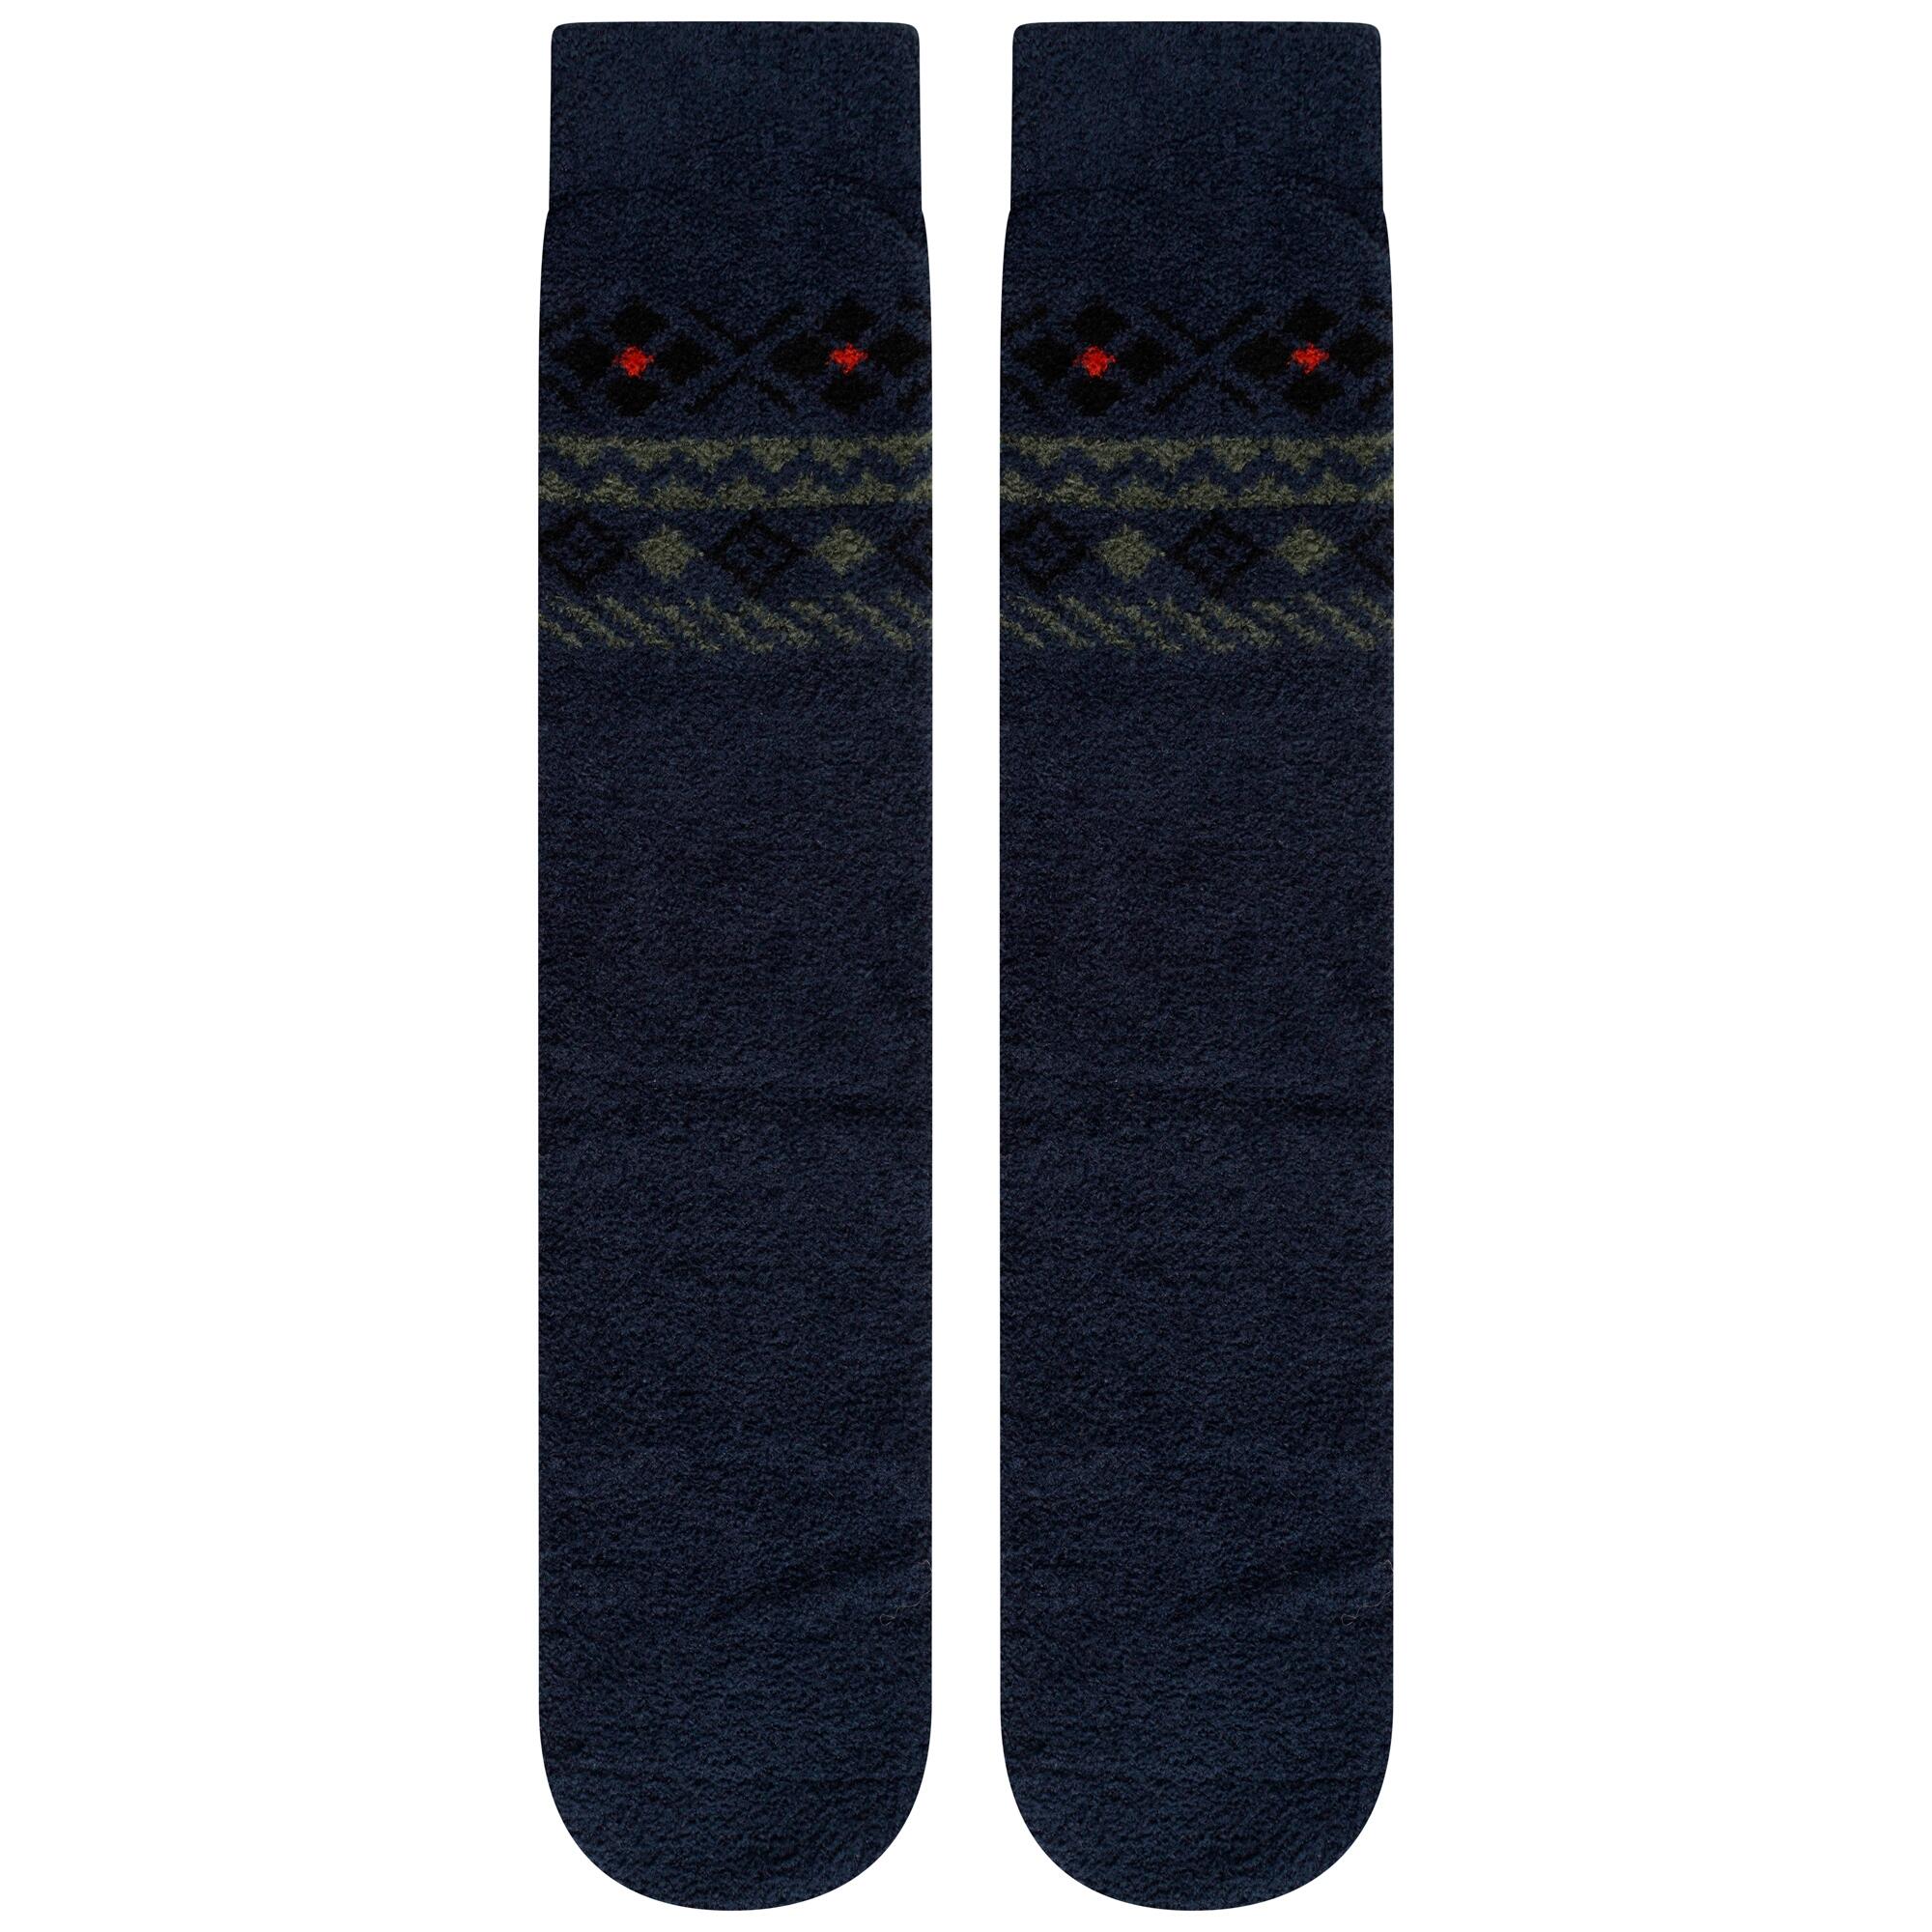 DARE 2B Unisex Adult Festivity Fair Isle Fluffy Christmas Socks (Moonlight Denim/Navy)